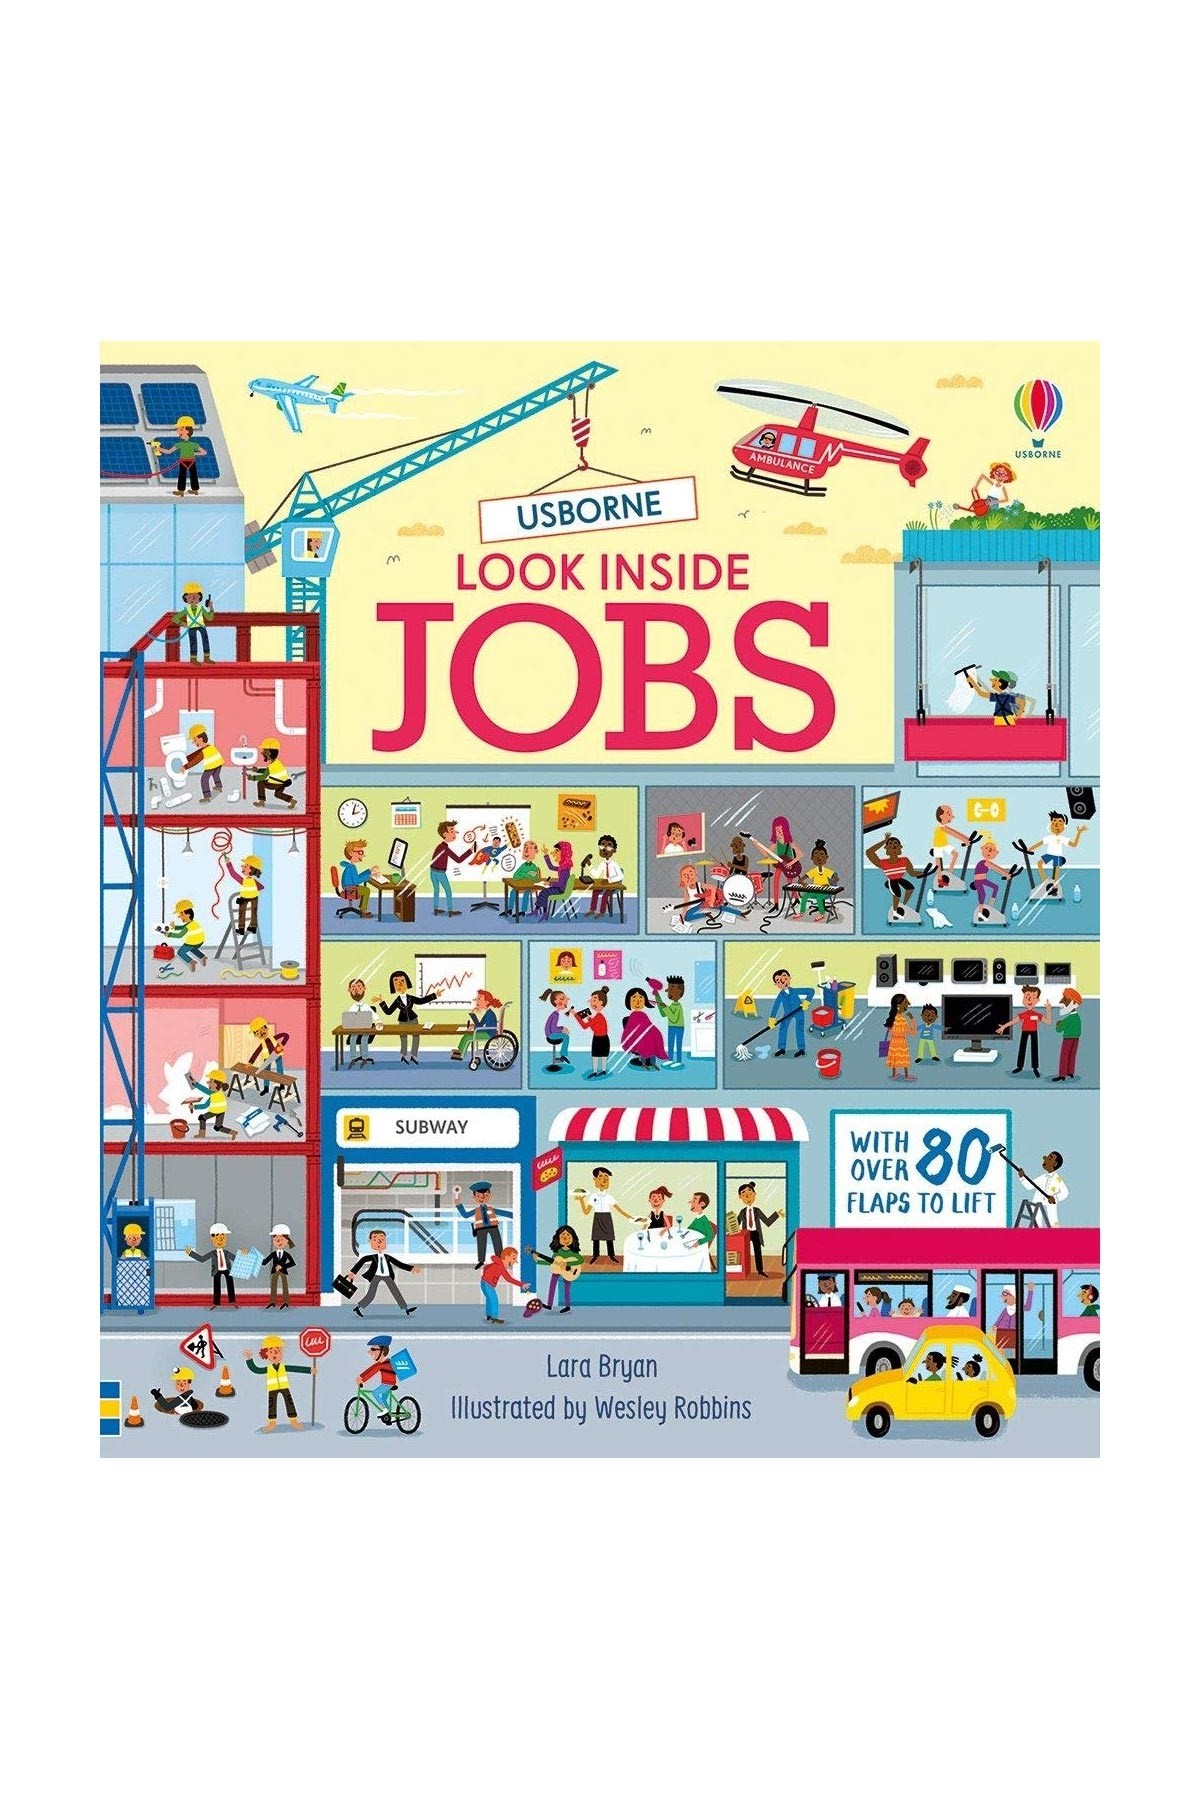 The Usborne Look Inside Jobs